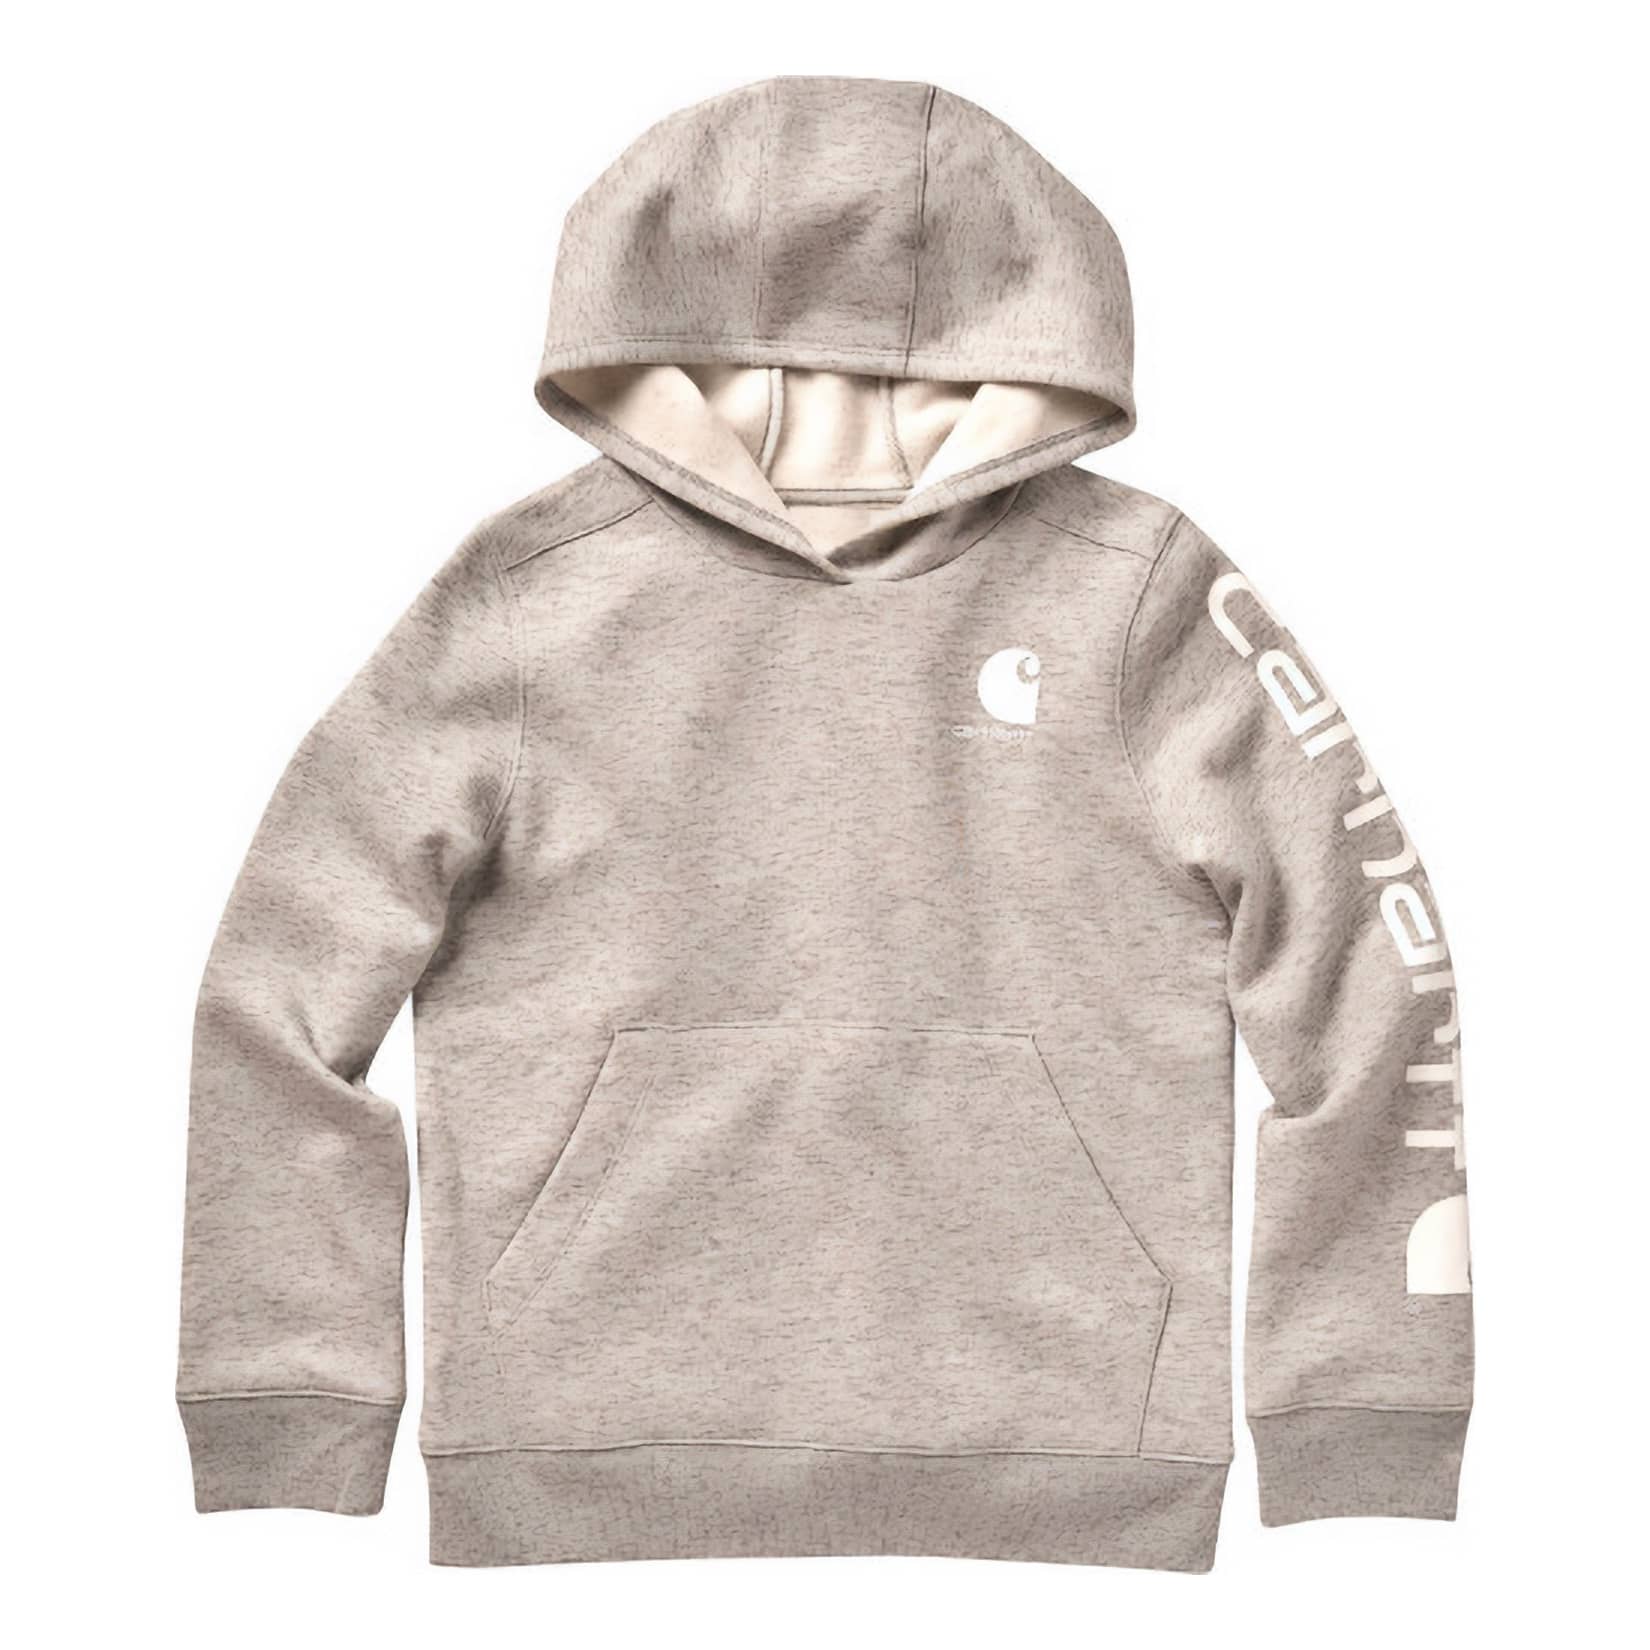 Carhartt® Boys’ Long-Sleeve Graphic Sweatshirt